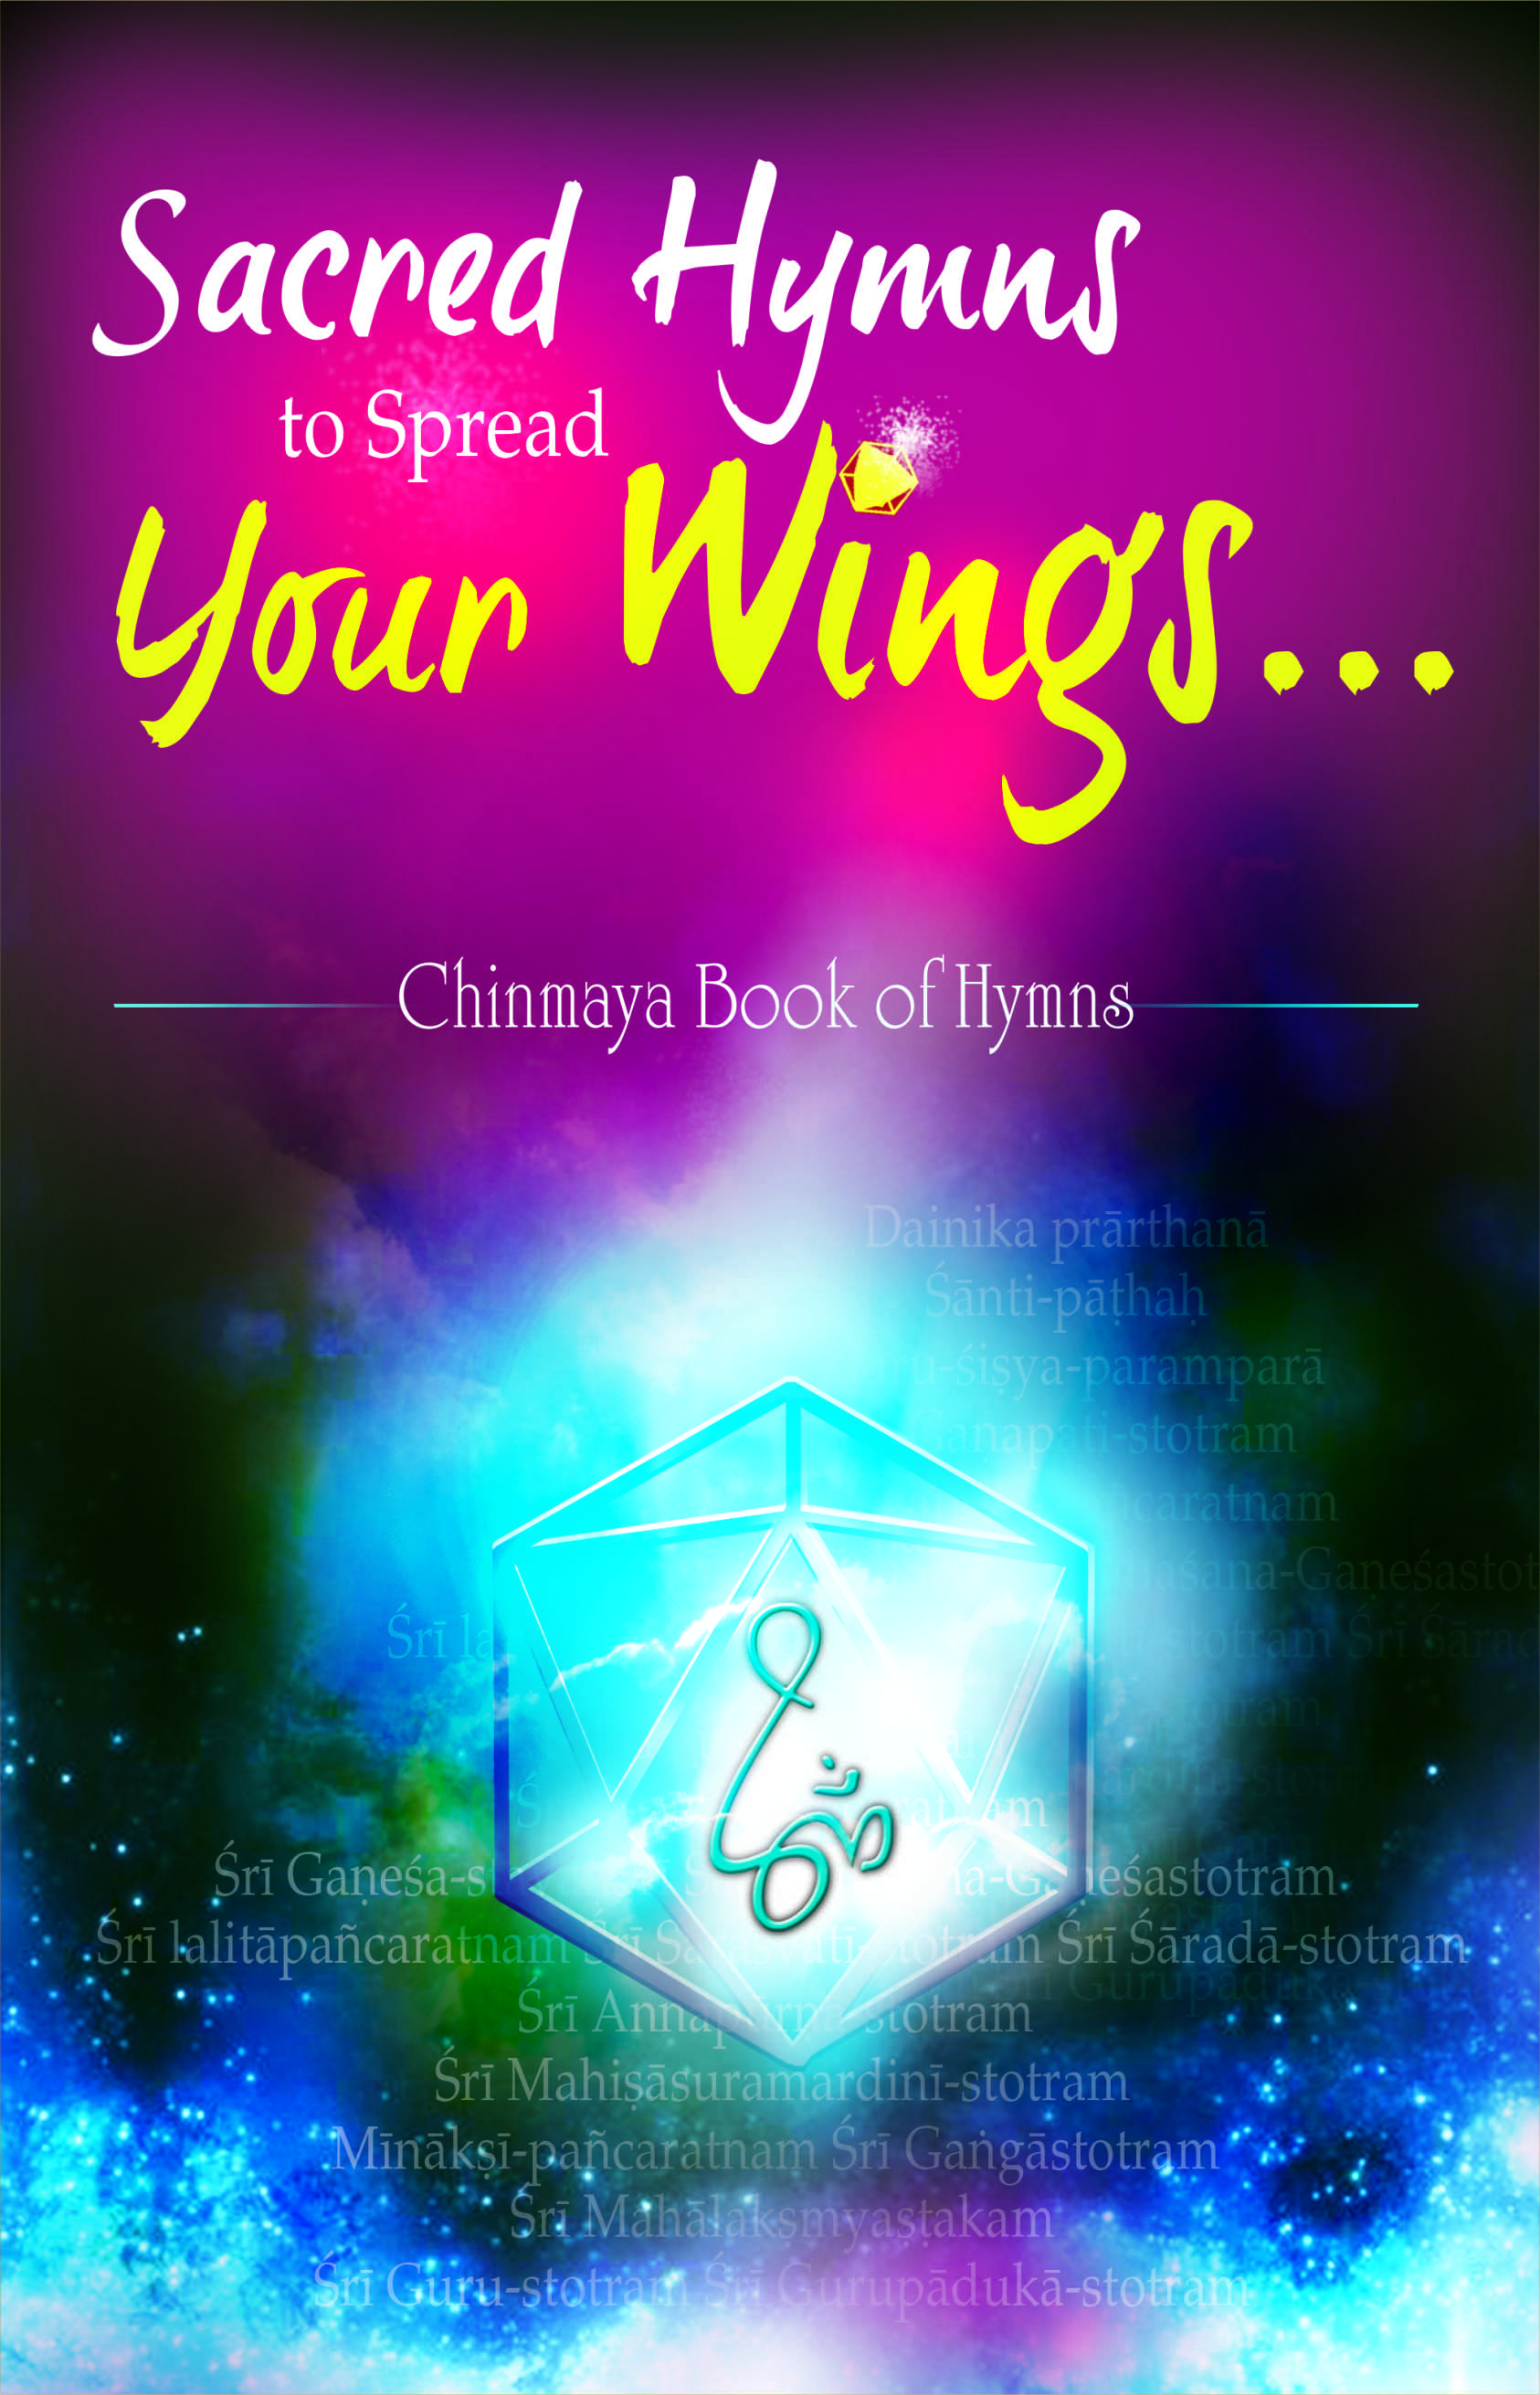 Chinmaya Book of Hymns